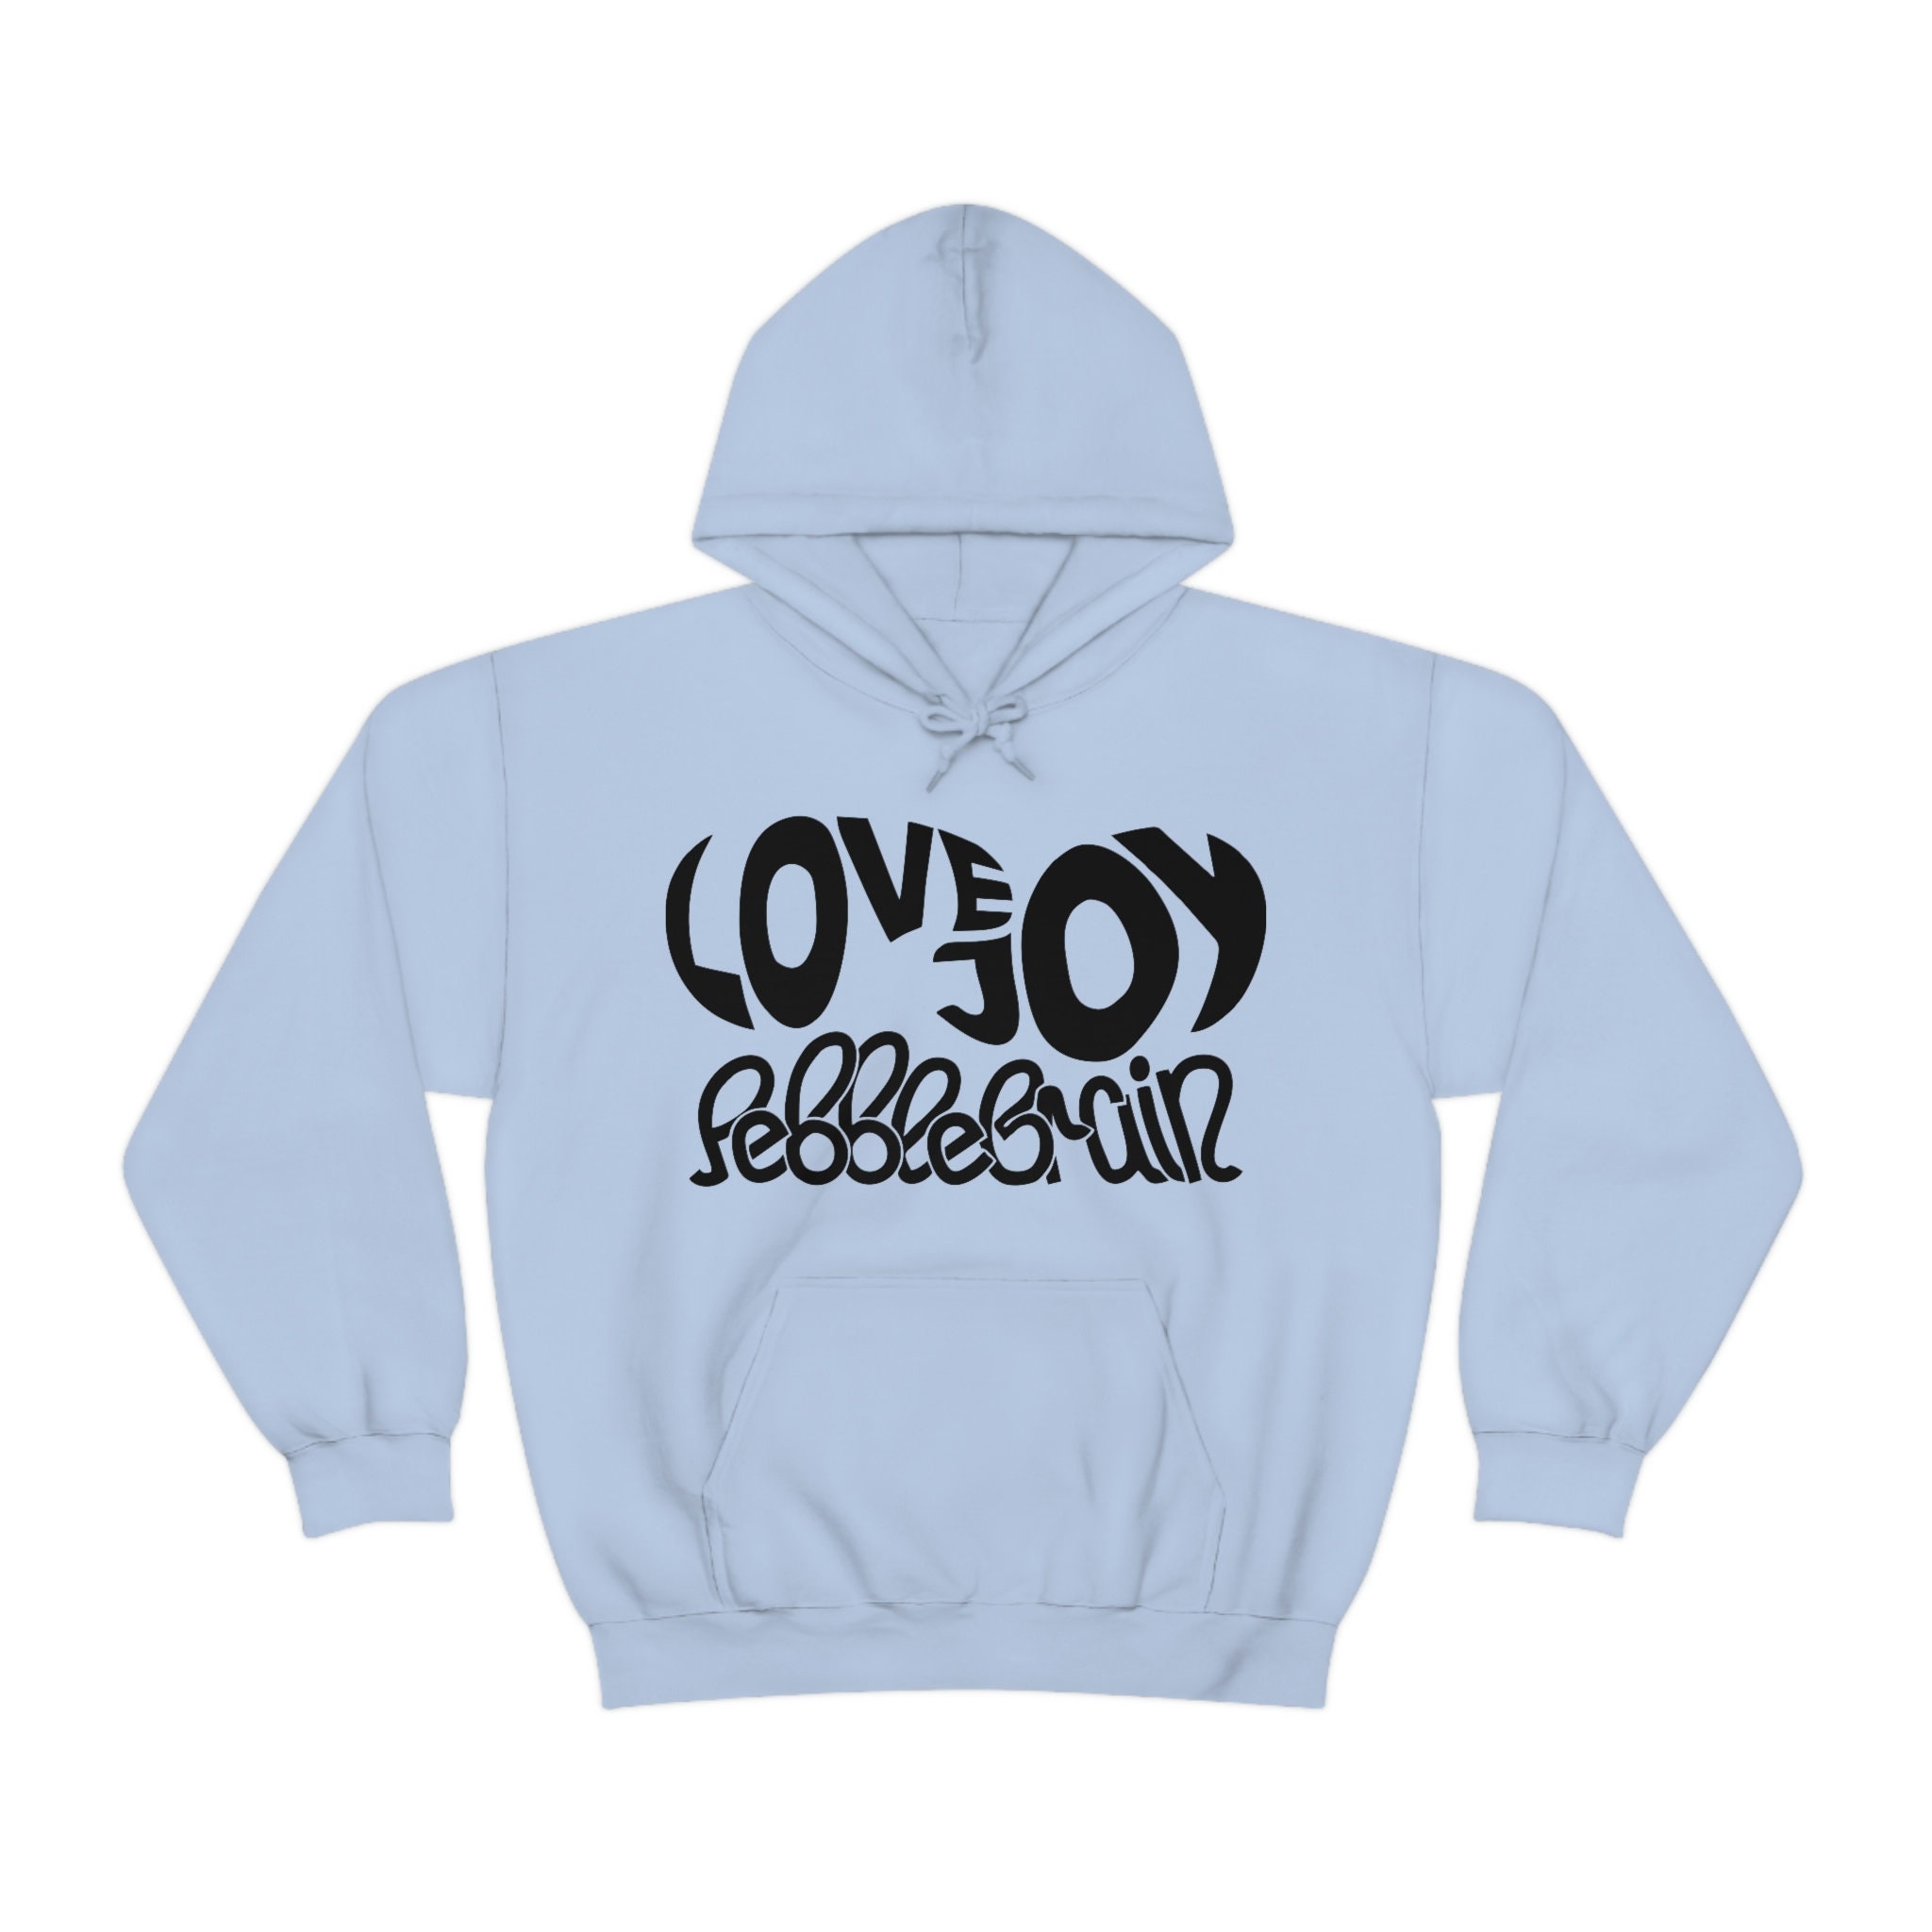 Lovejoy Peeblebrain Unisex Heavy Blend Hooded Sweatshirt - Etsy